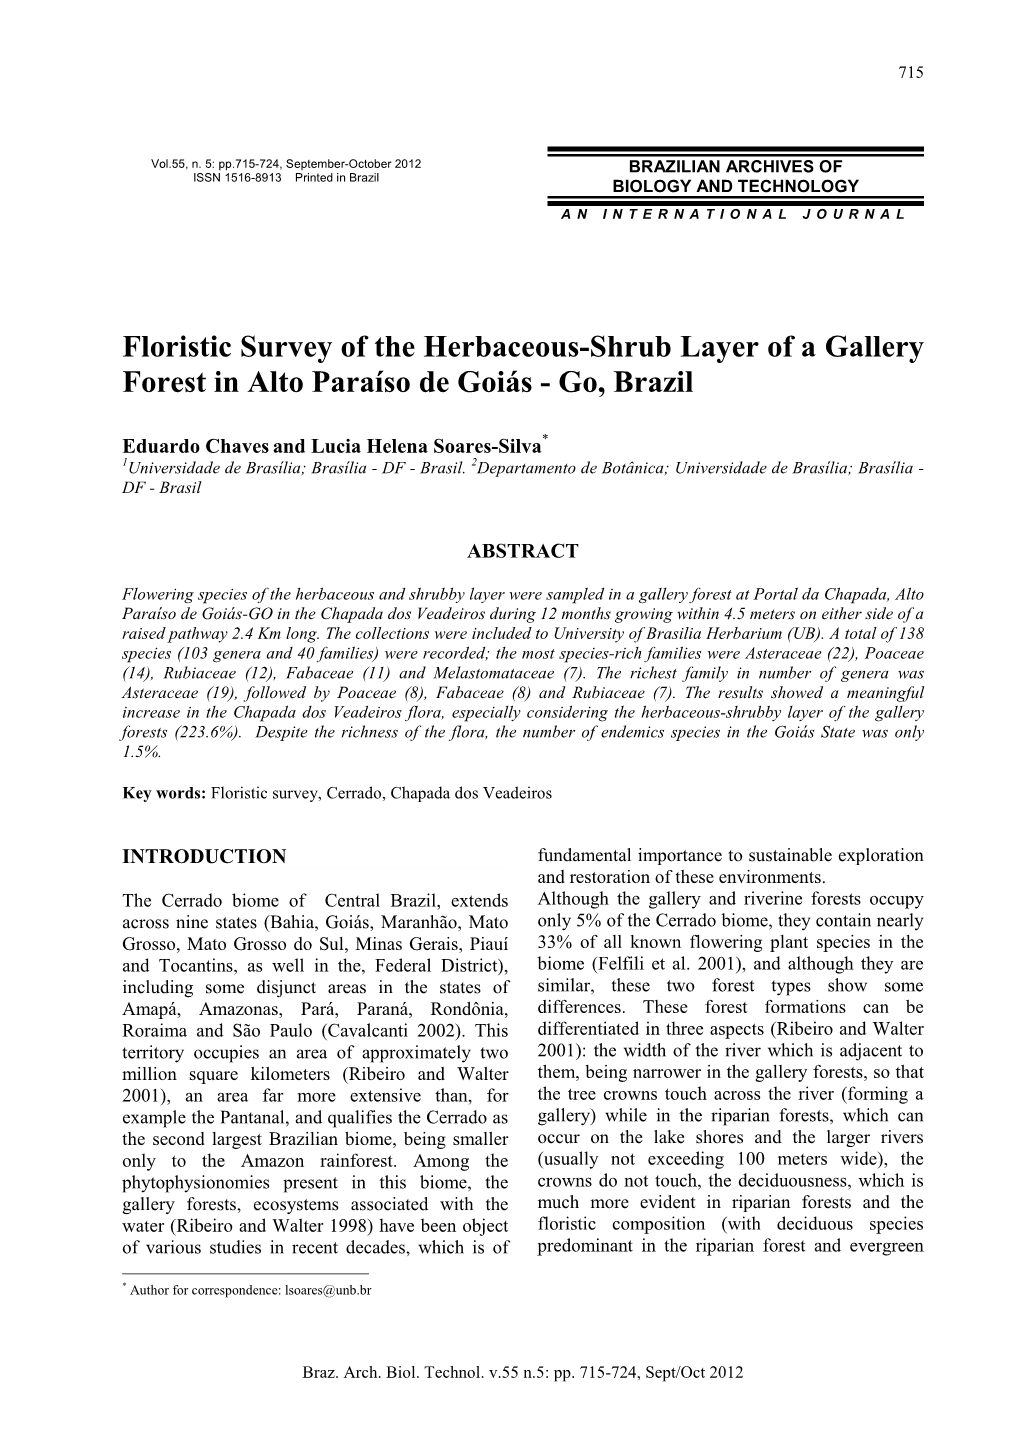 Floristic Survey of the Herbaceous-Shrub Layer of a Gallery Forest in Alto Paraíso De Goiás - Go, Brazil